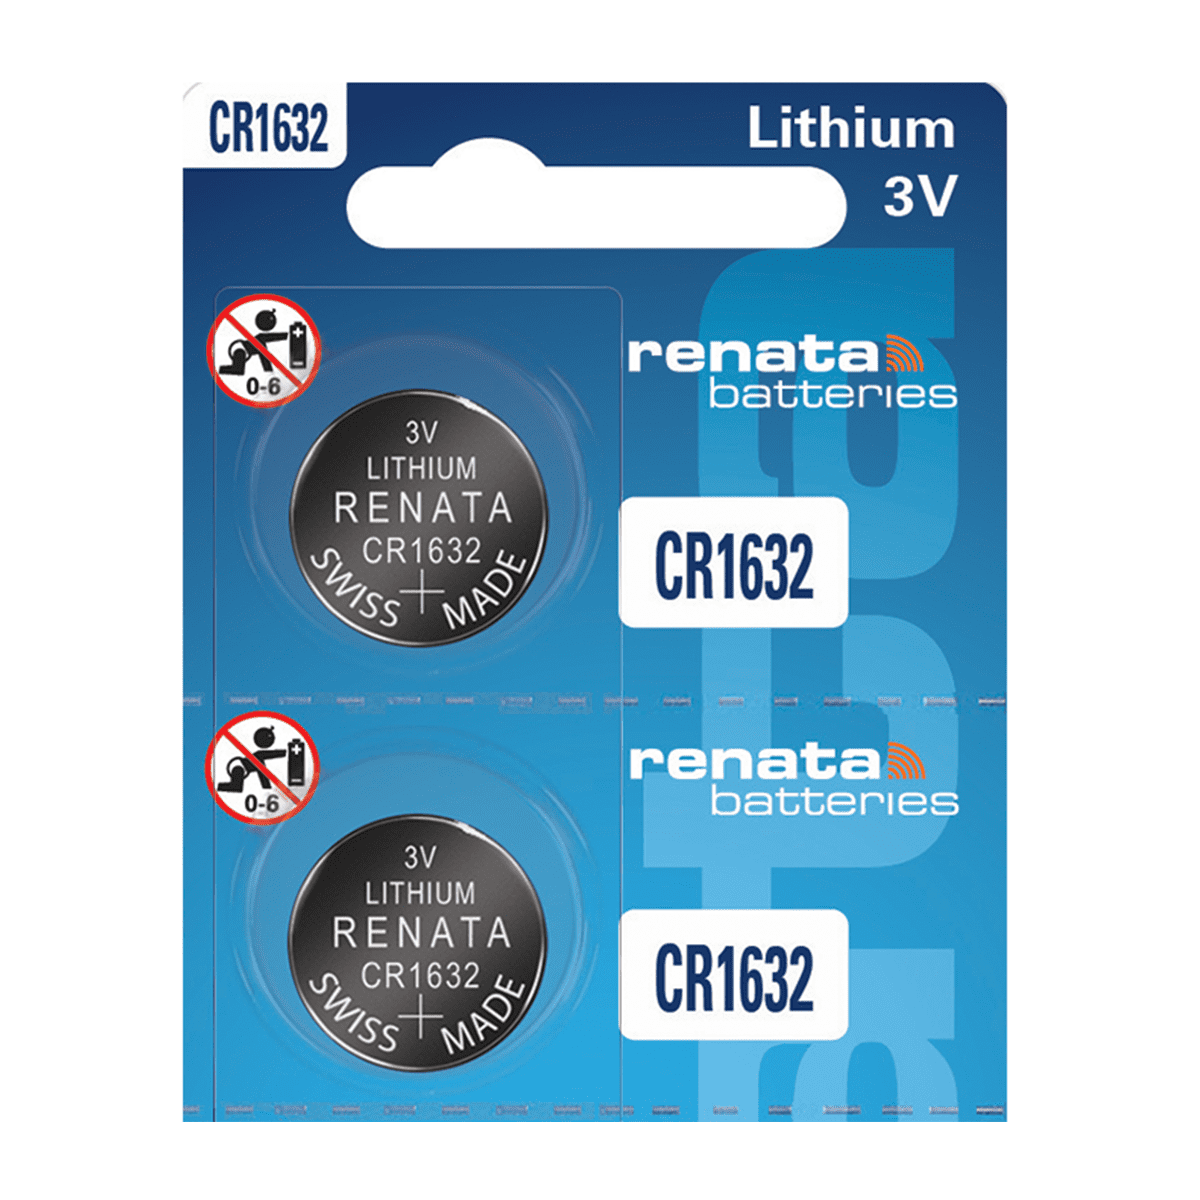 VARTA CR1632 x2 Pile lithium 3V - Vaica - spécialiste batteries